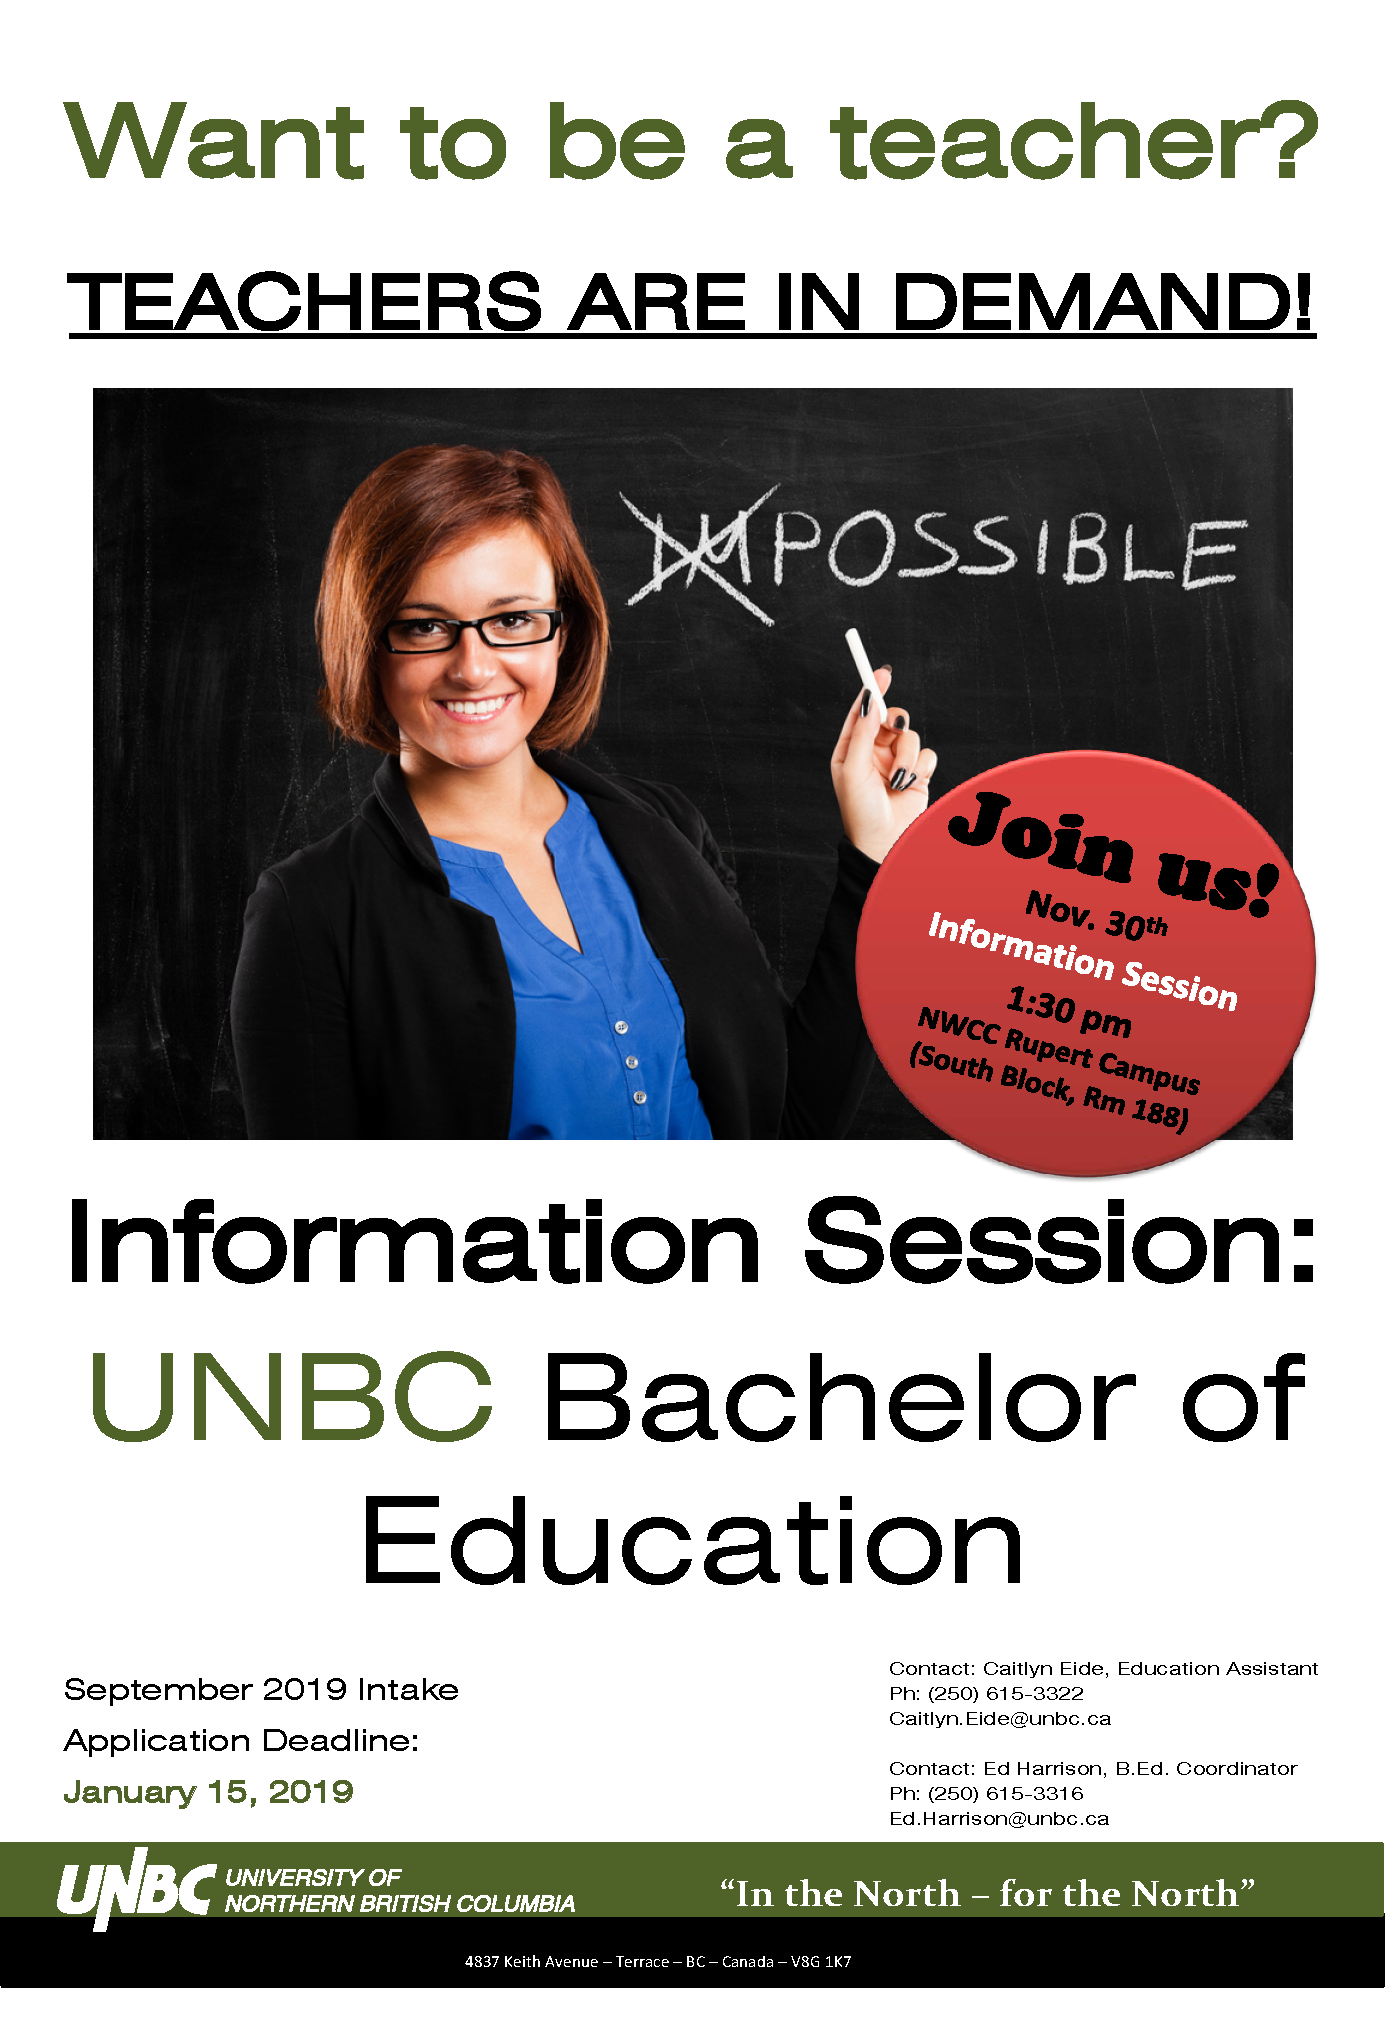 Information Session: UNBC Bachelor of Education